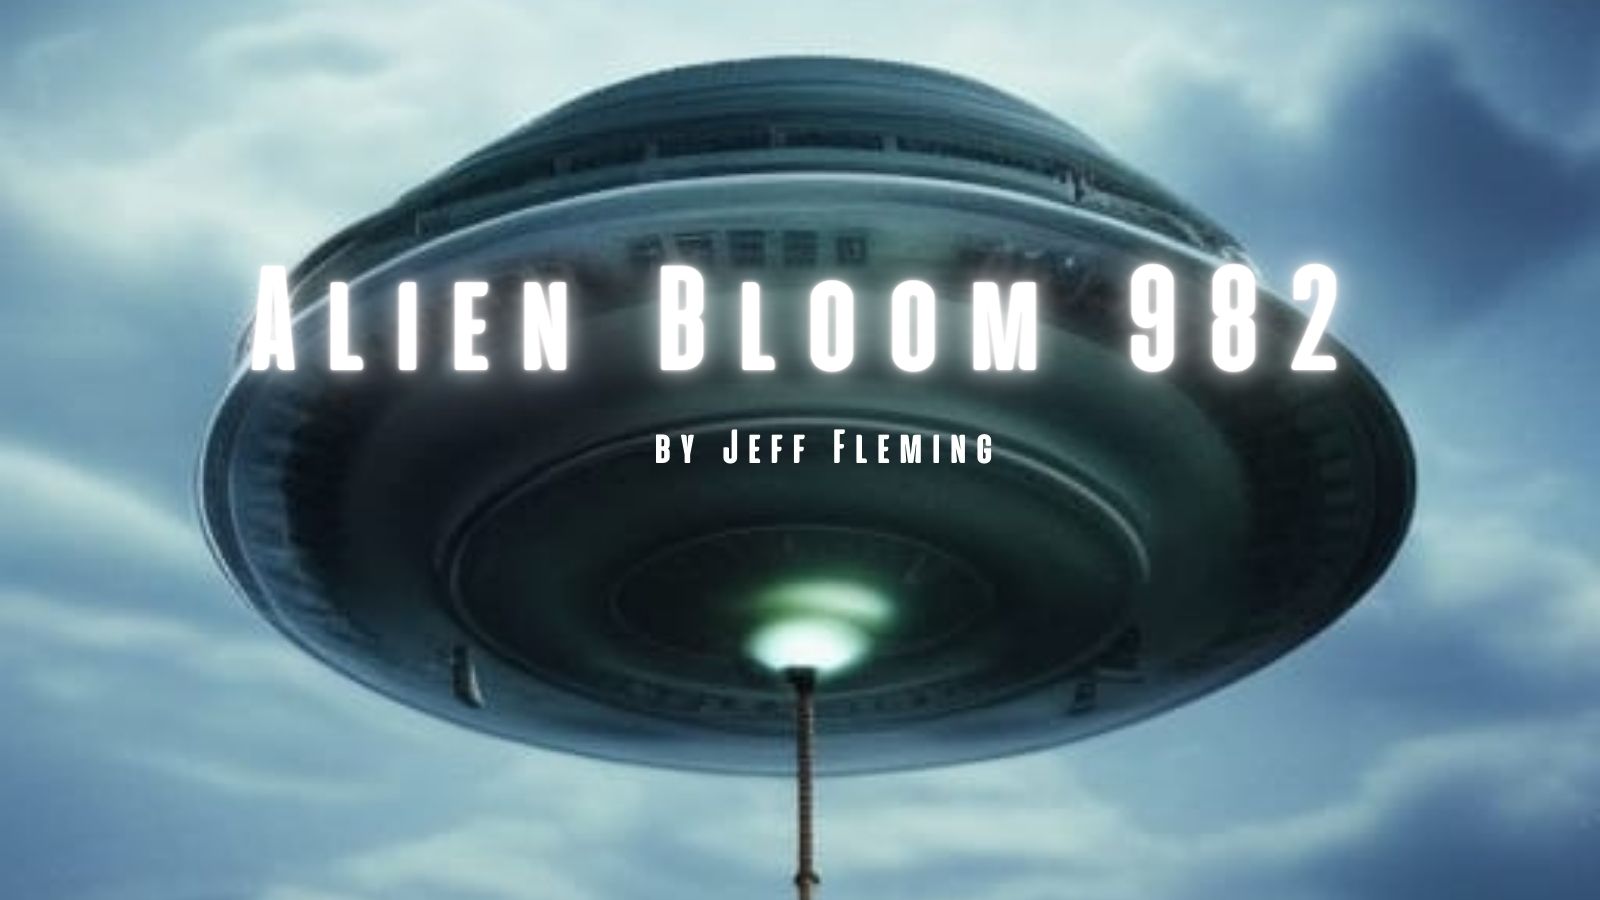 Alien Bloom 982